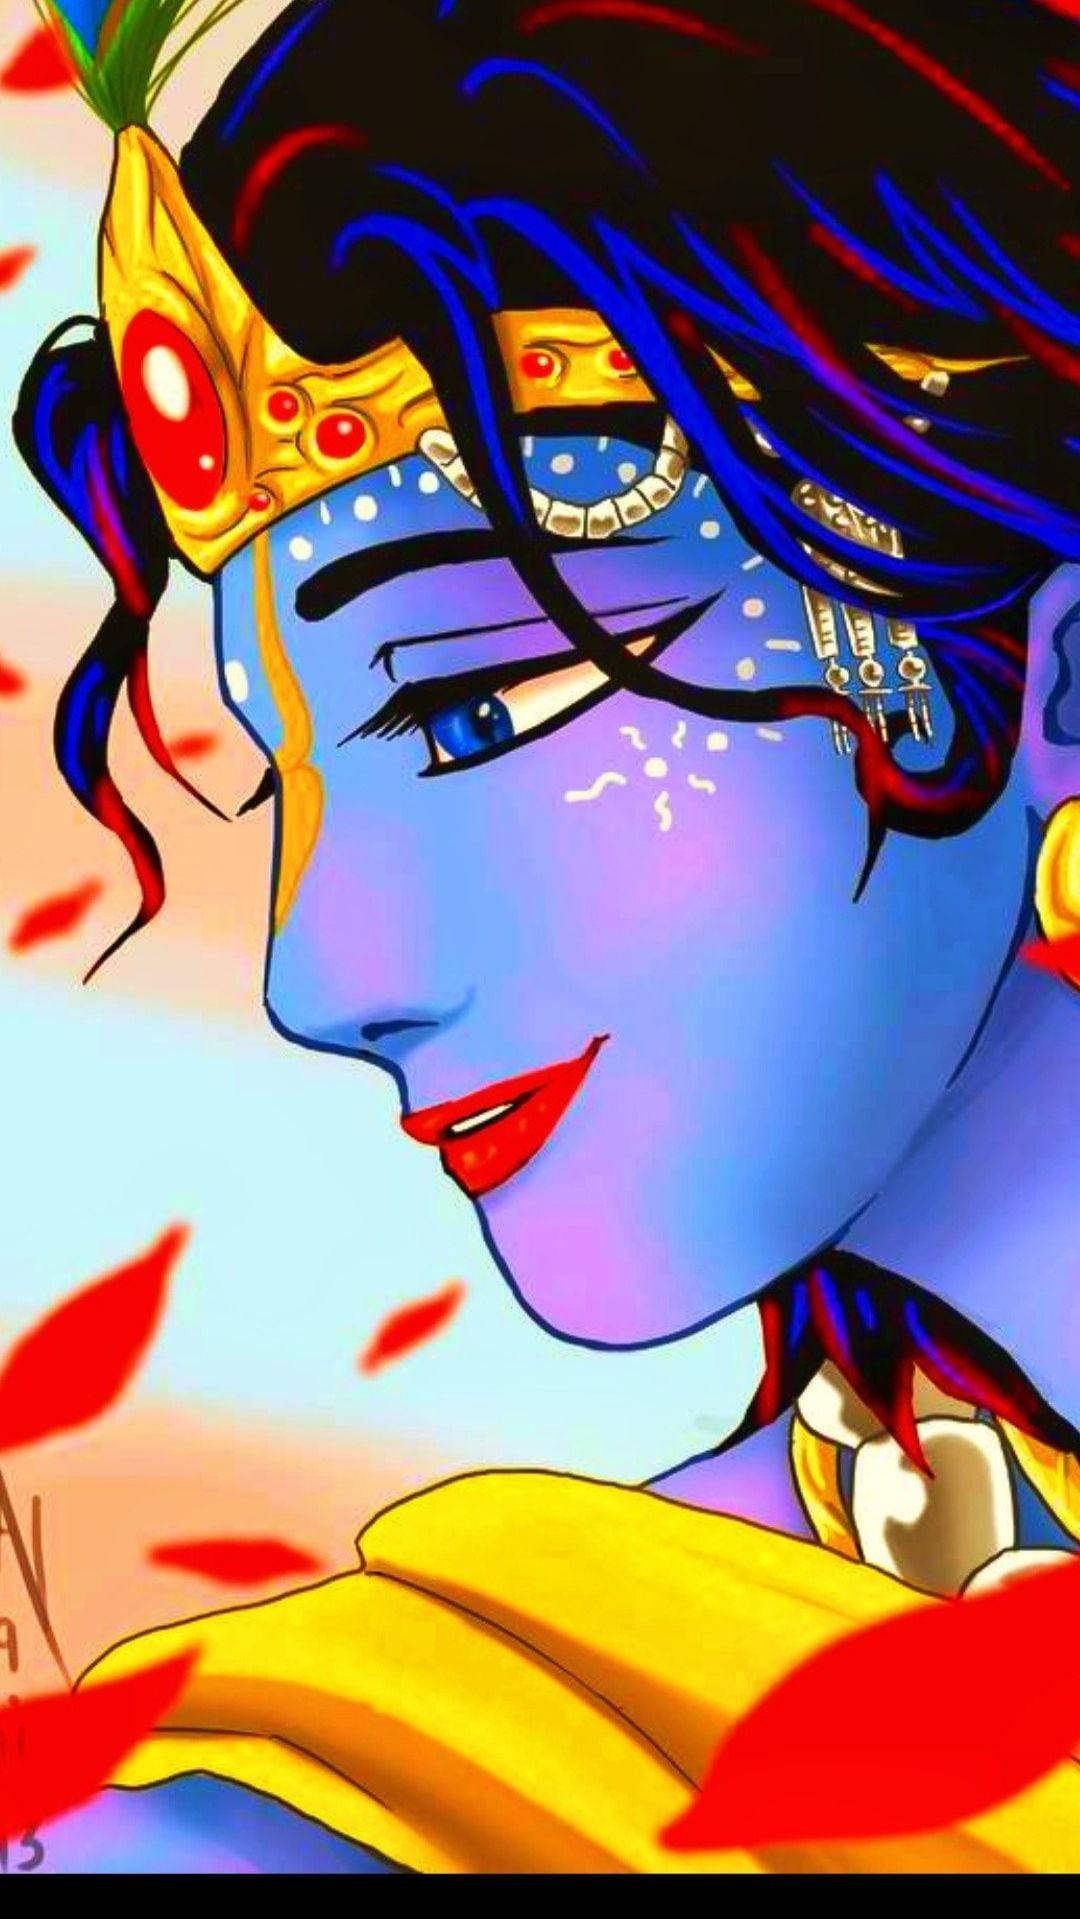 Free Krishna Ji Wallpaper Downloads, [100+] Krishna Ji Wallpapers for FREE  